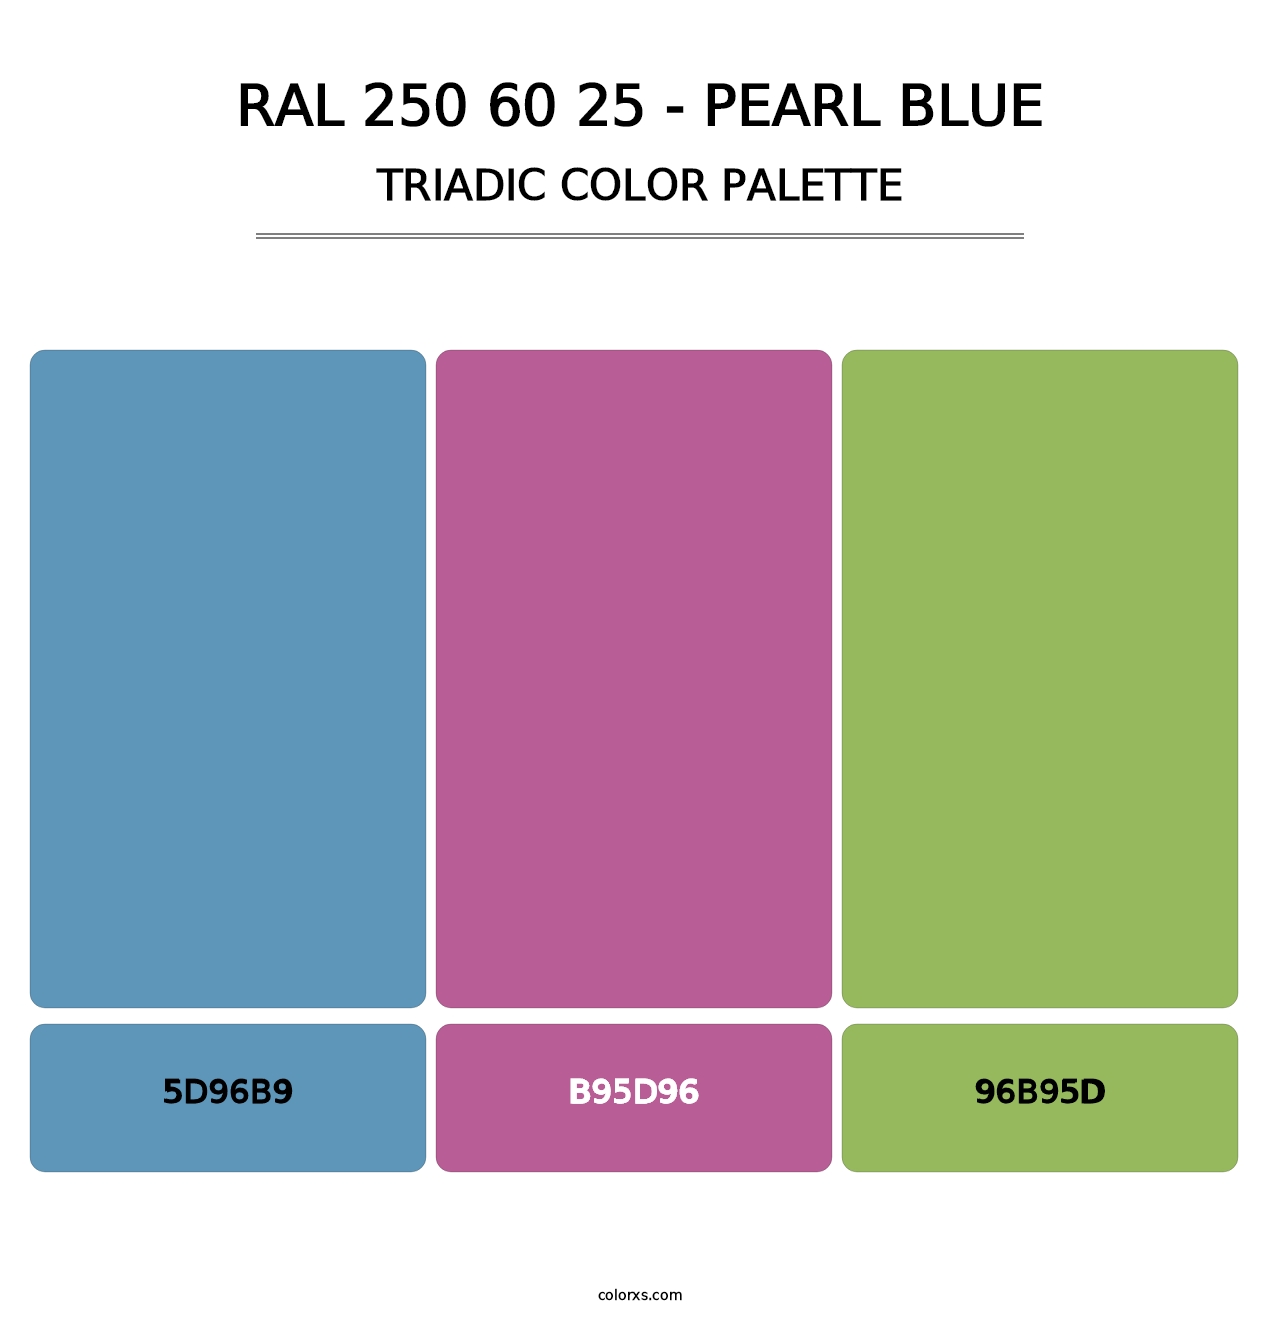 RAL 250 60 25 - Pearl Blue - Triadic Color Palette